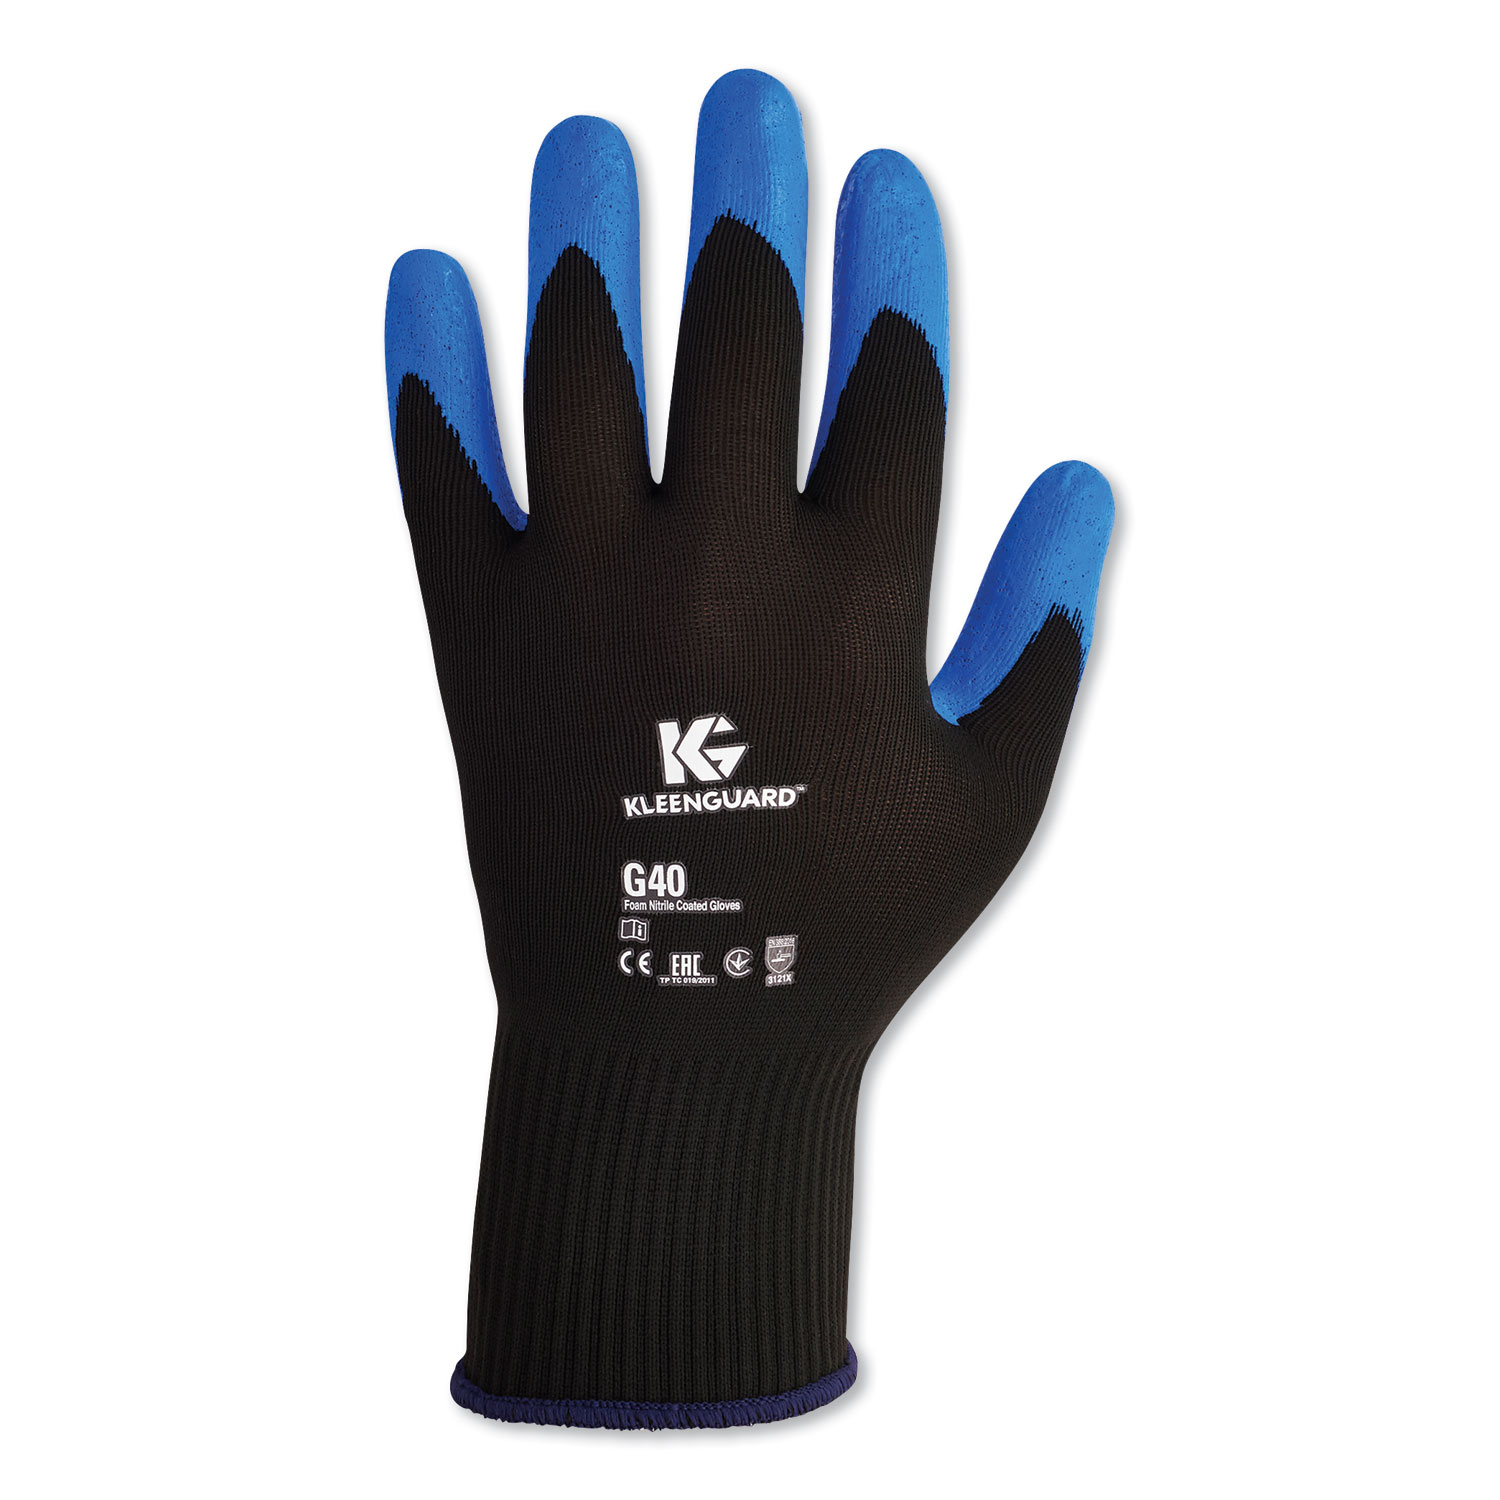  KleenGuard 40226 G40 Nitrile Coated Gloves, 230 mm Length, Medium/Size 8, Blue, 12 Pairs (KCC40226) 